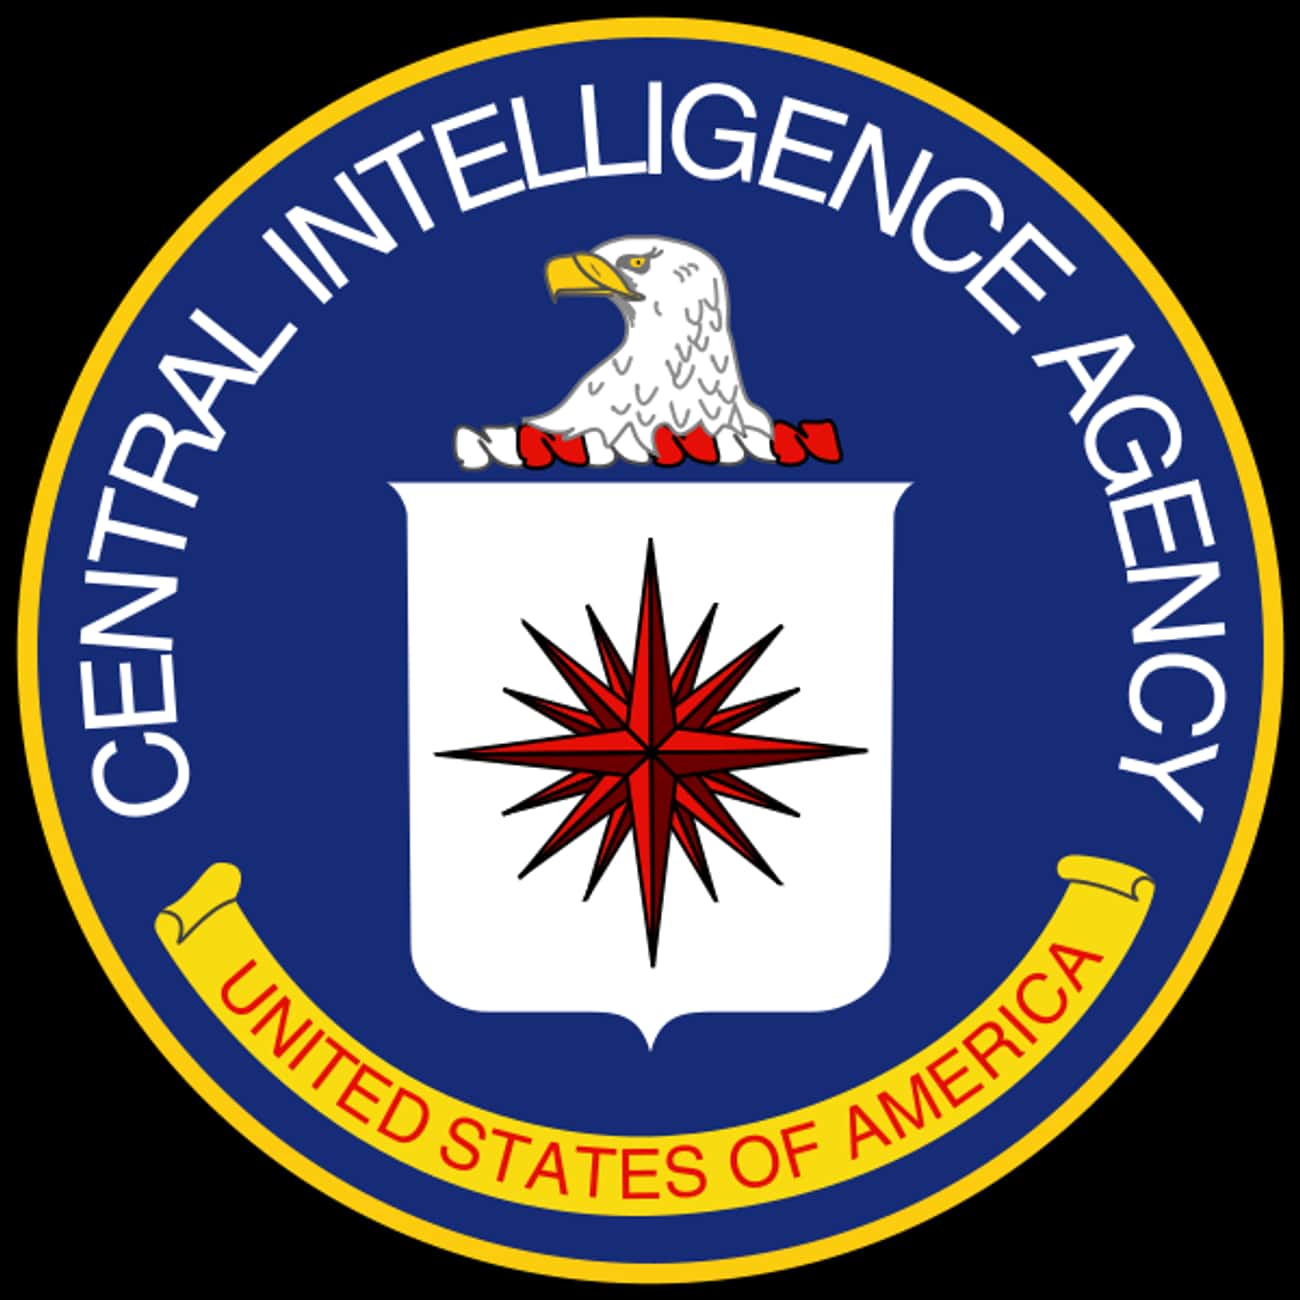 CIA Mind Control